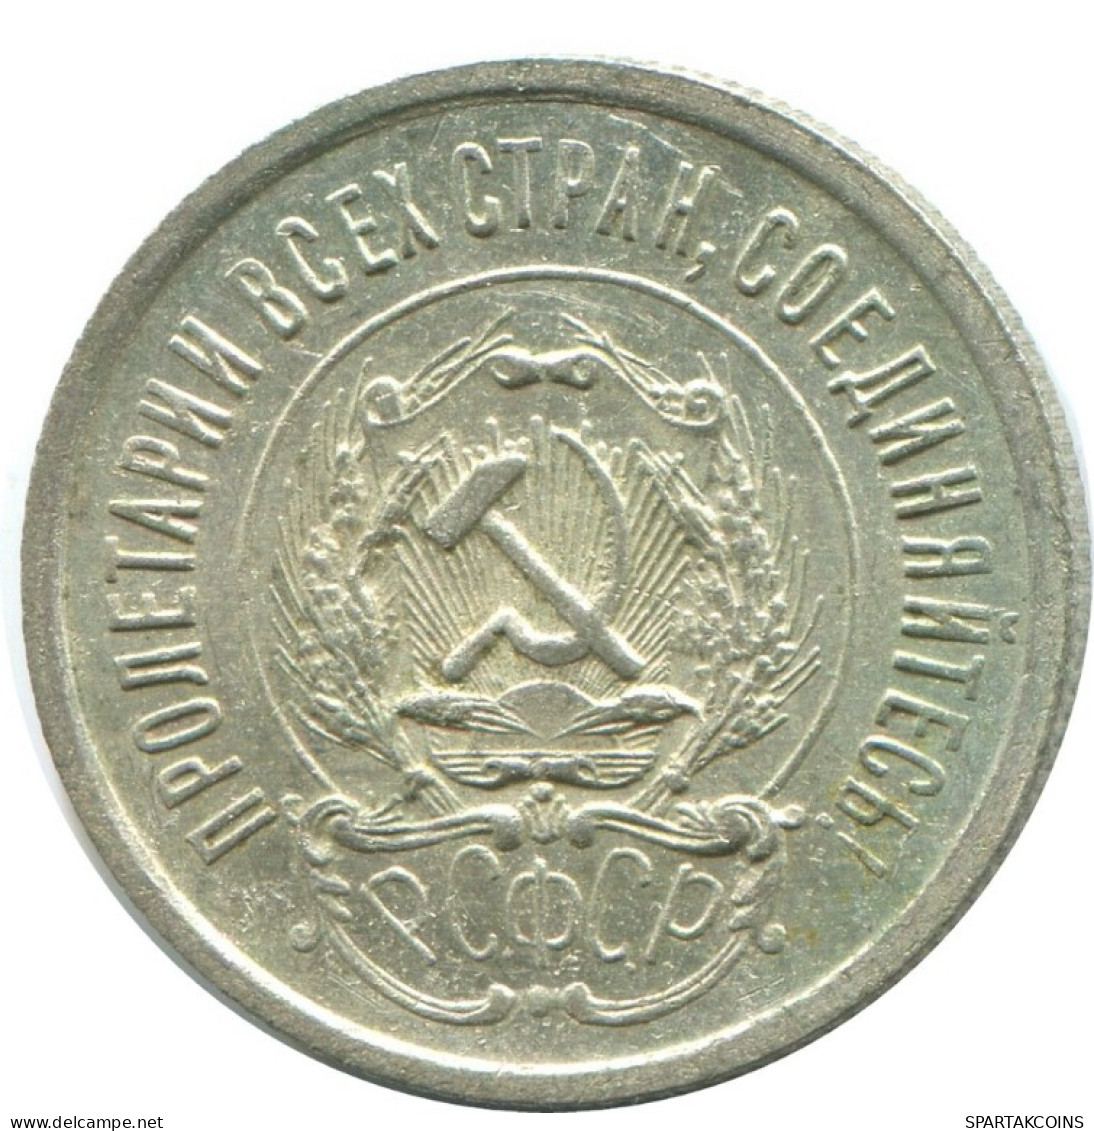 20 KOPEKS 1923 RUSSIA RSFSR SILVER Coin HIGH GRADE #AF604.U.A - Rusia